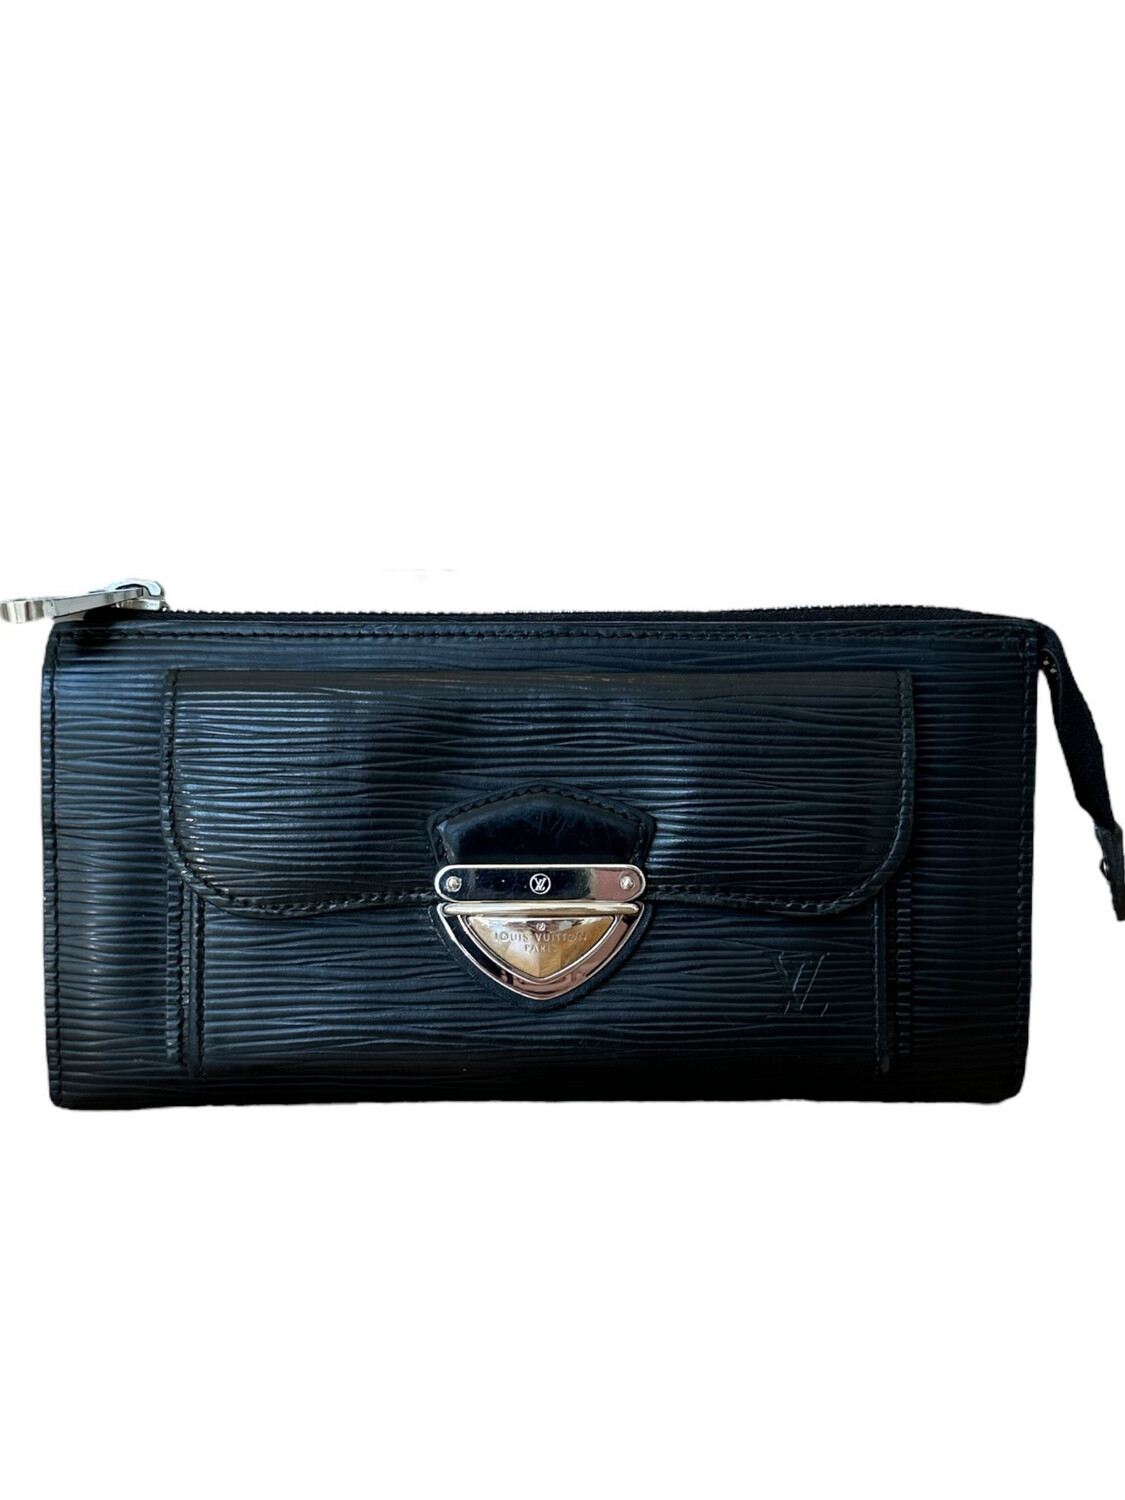 Louis Vuitton Black Epi Leather wallet